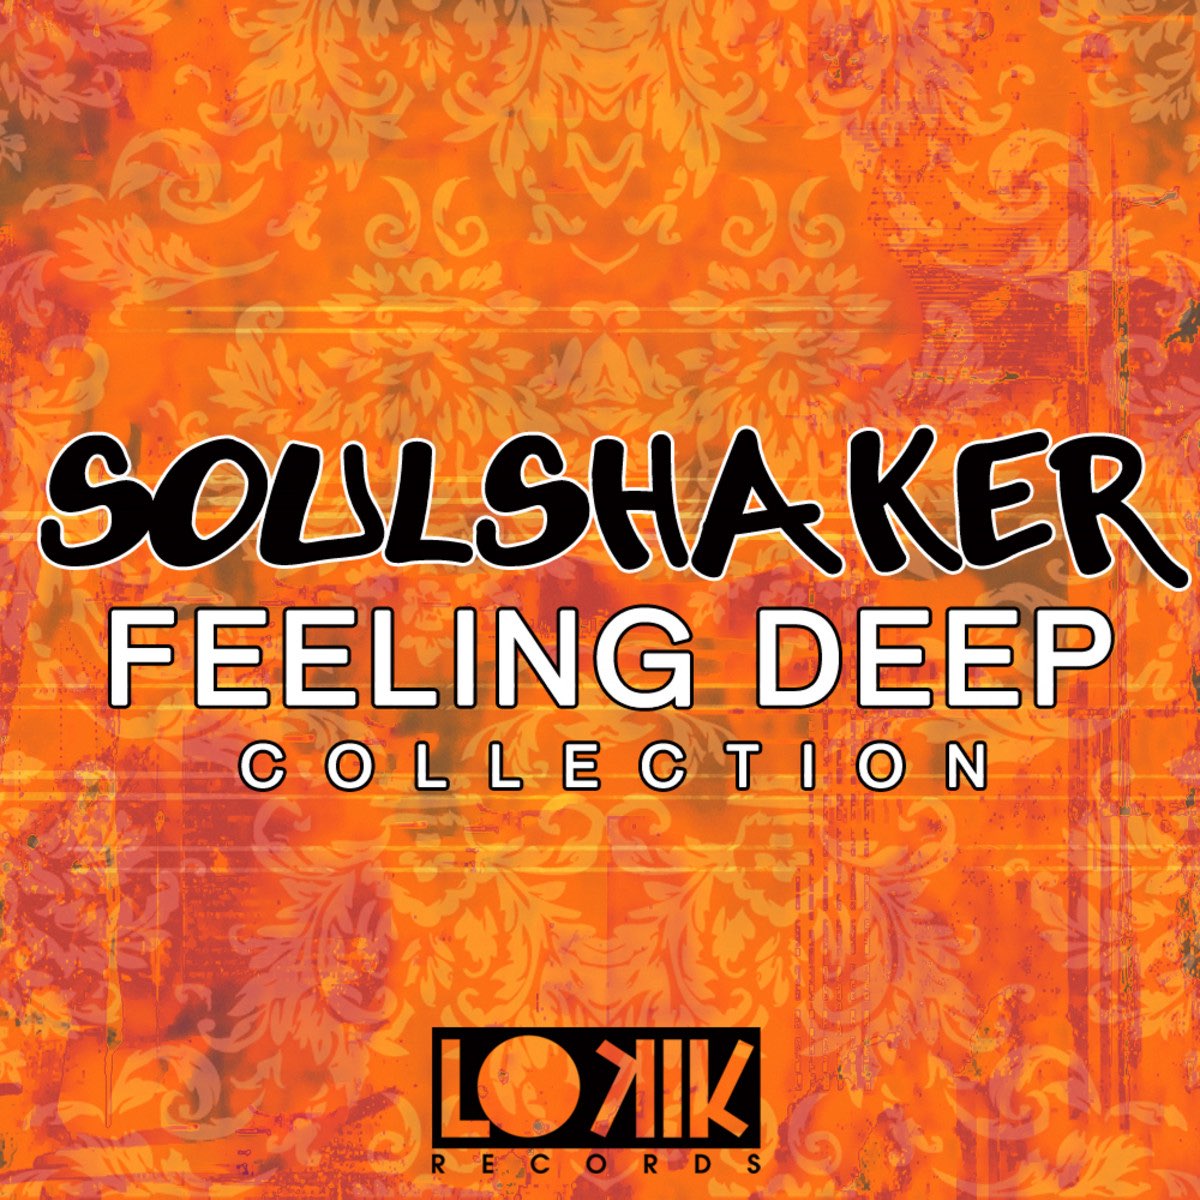 Shake the feeling. Deep feelings. Eternal Soul Lifting me higher (Soulshaker's Terrace Mix).